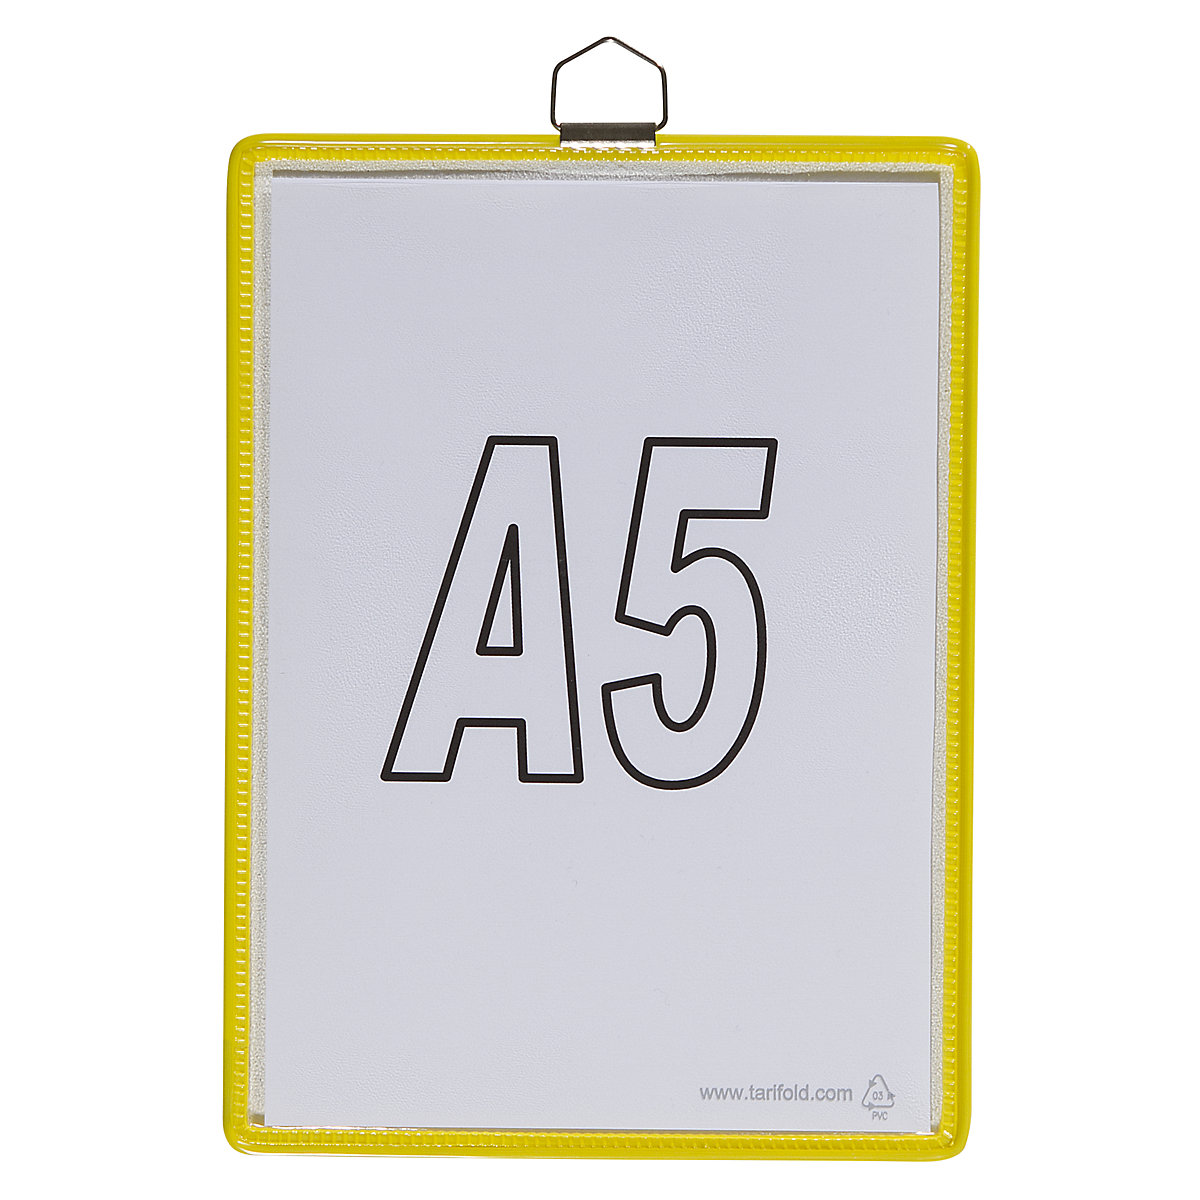 Buzunar transparent suspendabil – Tarifold, pentru format DIN A5, galben, amb. 10 buc.-5